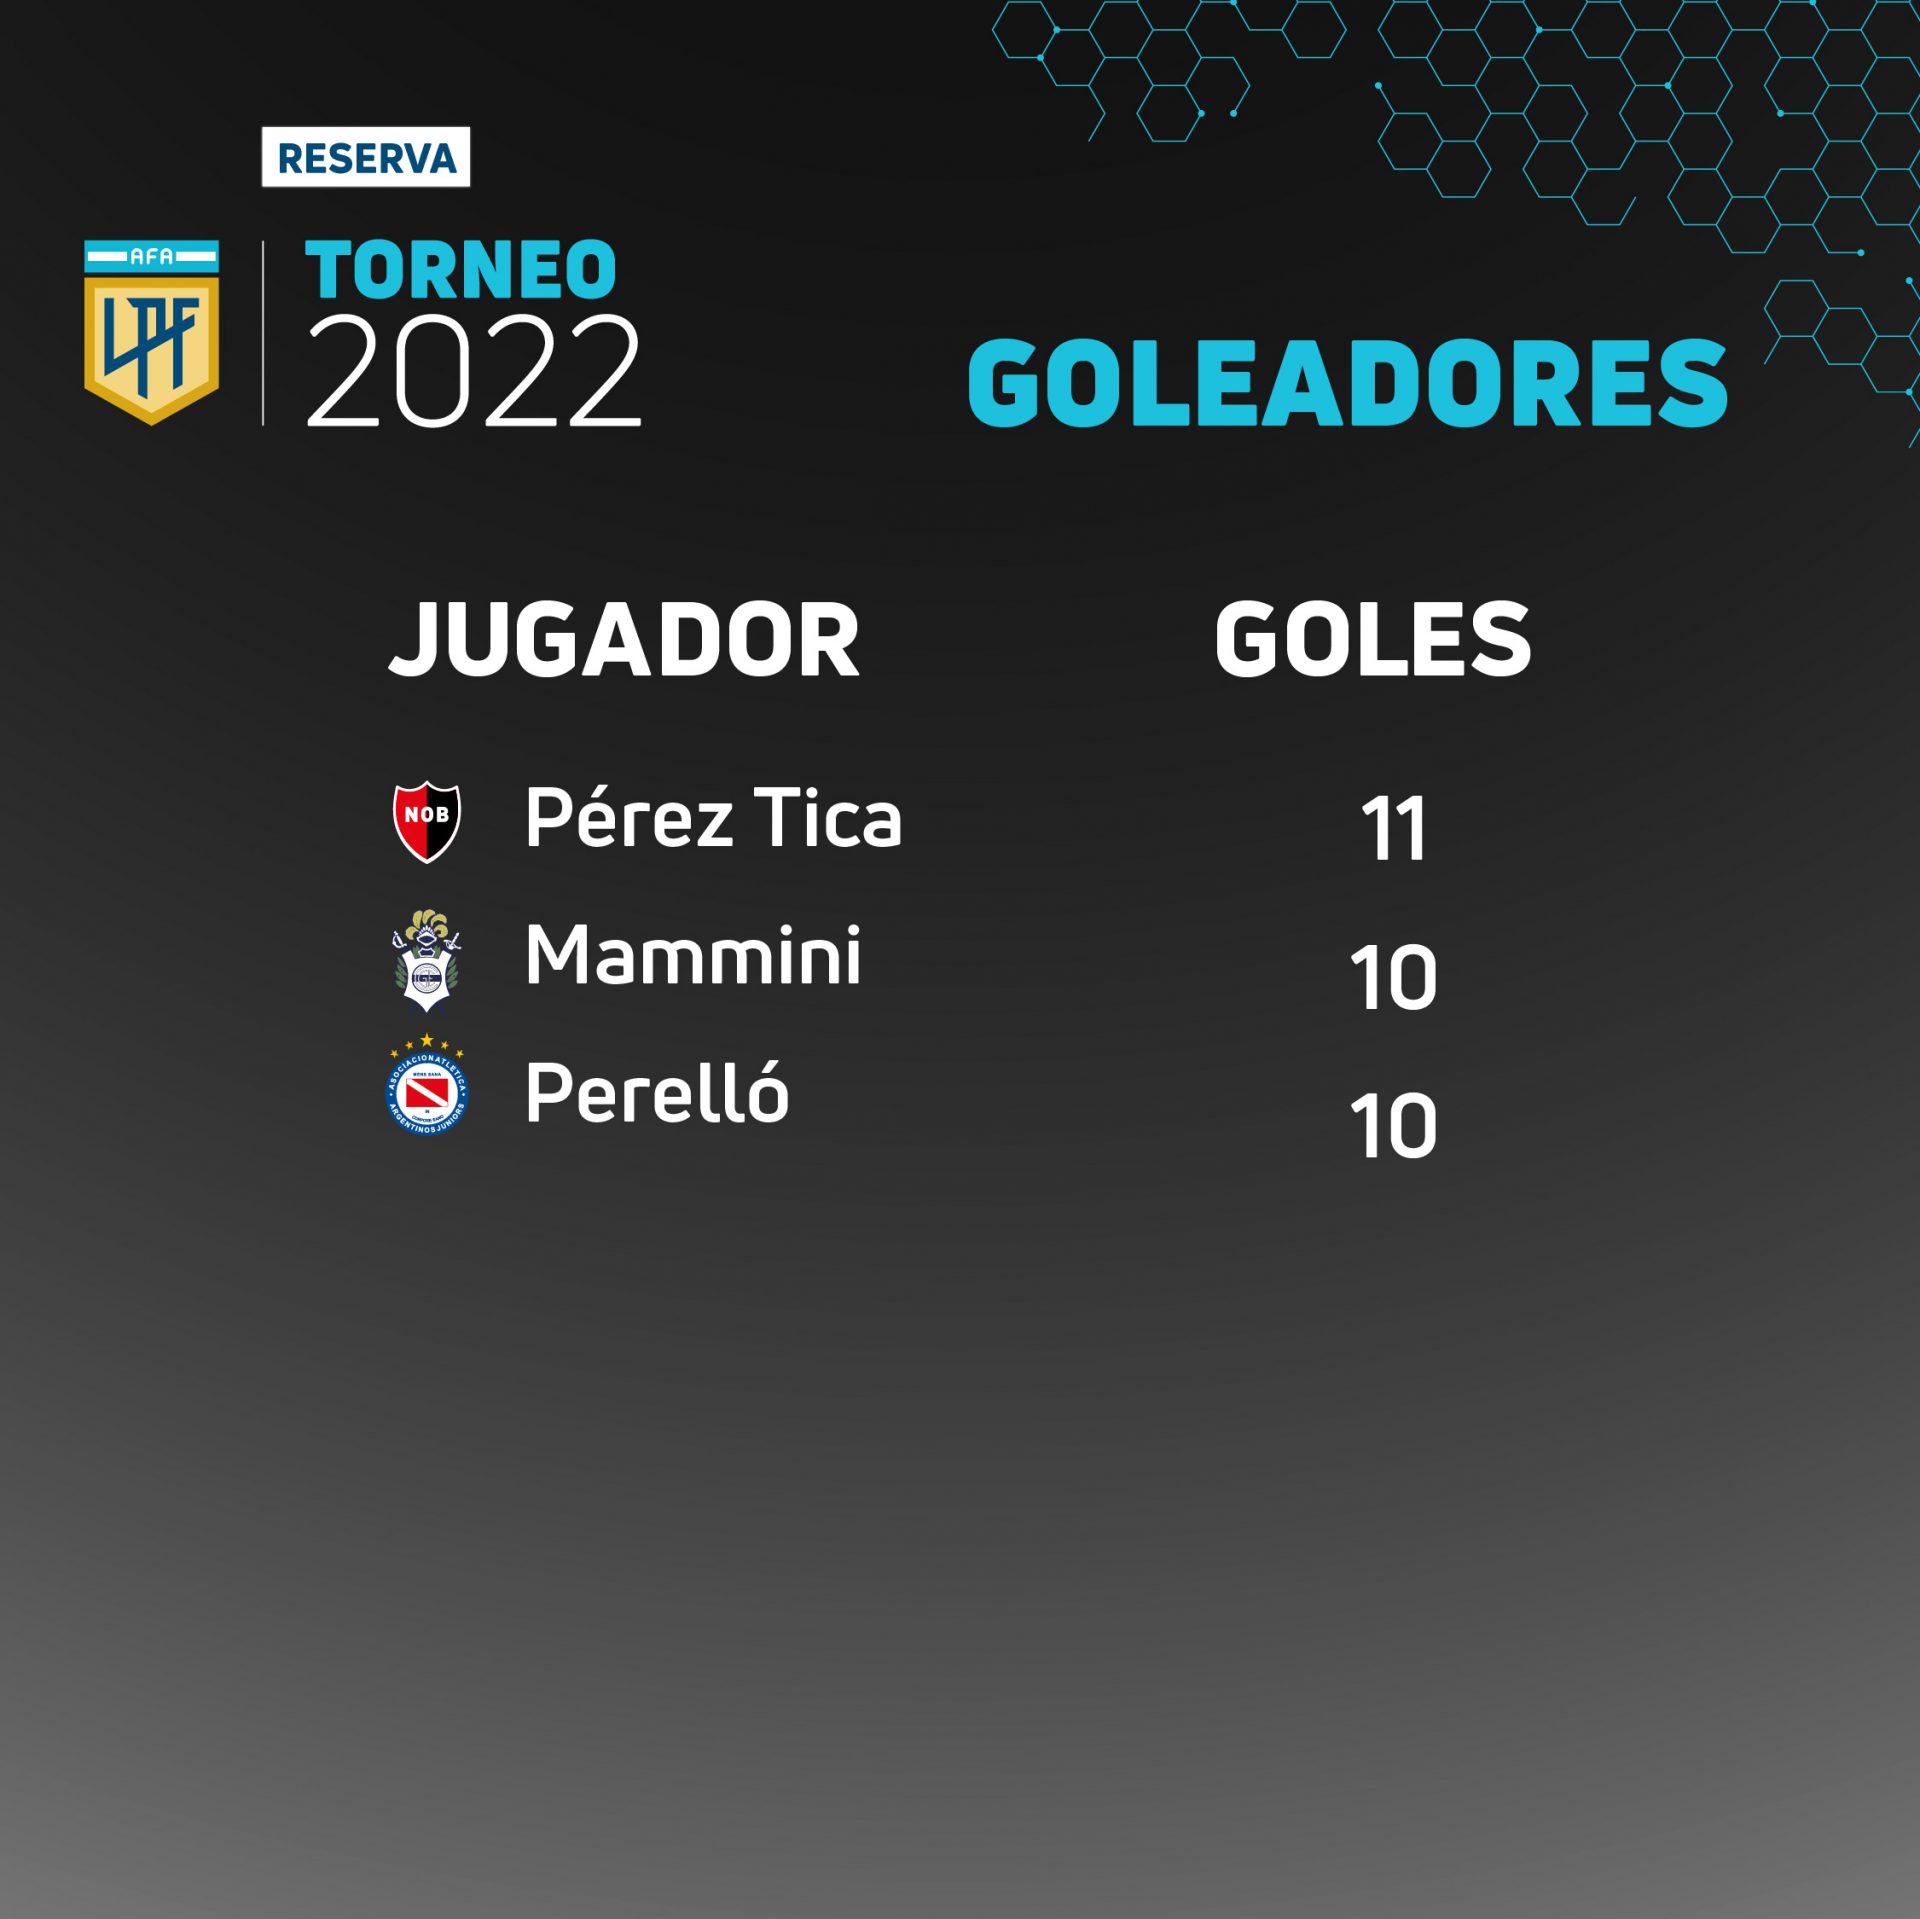 Goleadores-02